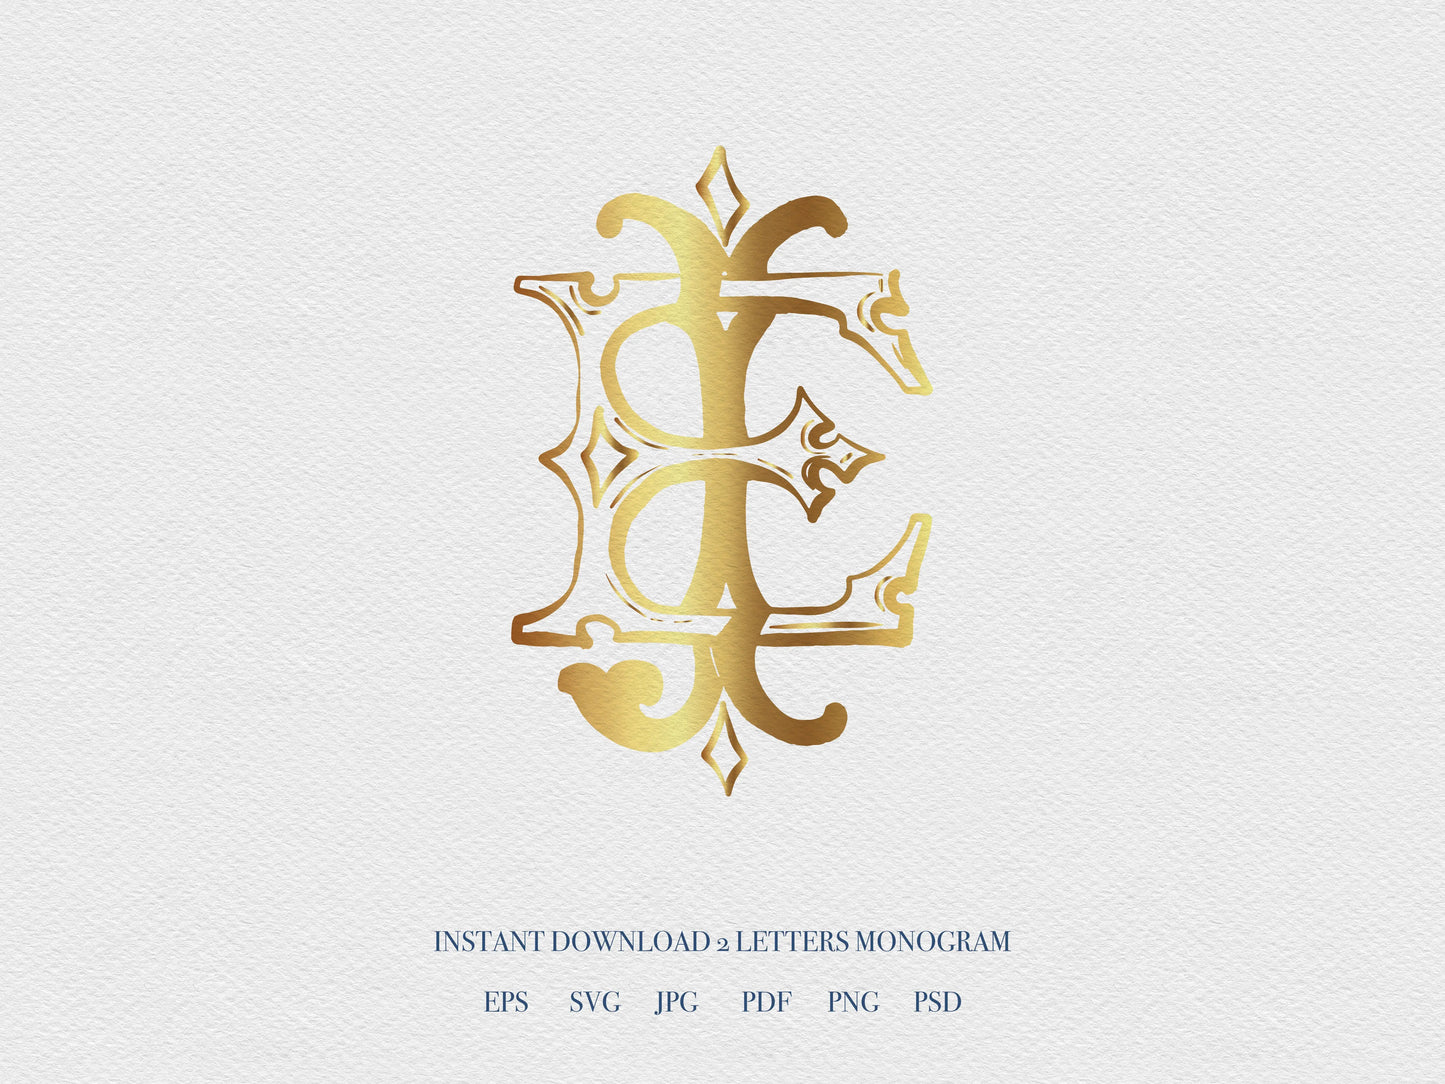 2 Letter Monogram with Letters EJ | Digital Download - Wedding Monogram SVG, Personal Logo, Wedding Logo for Wedding Invitations The Wedding Crest Lab